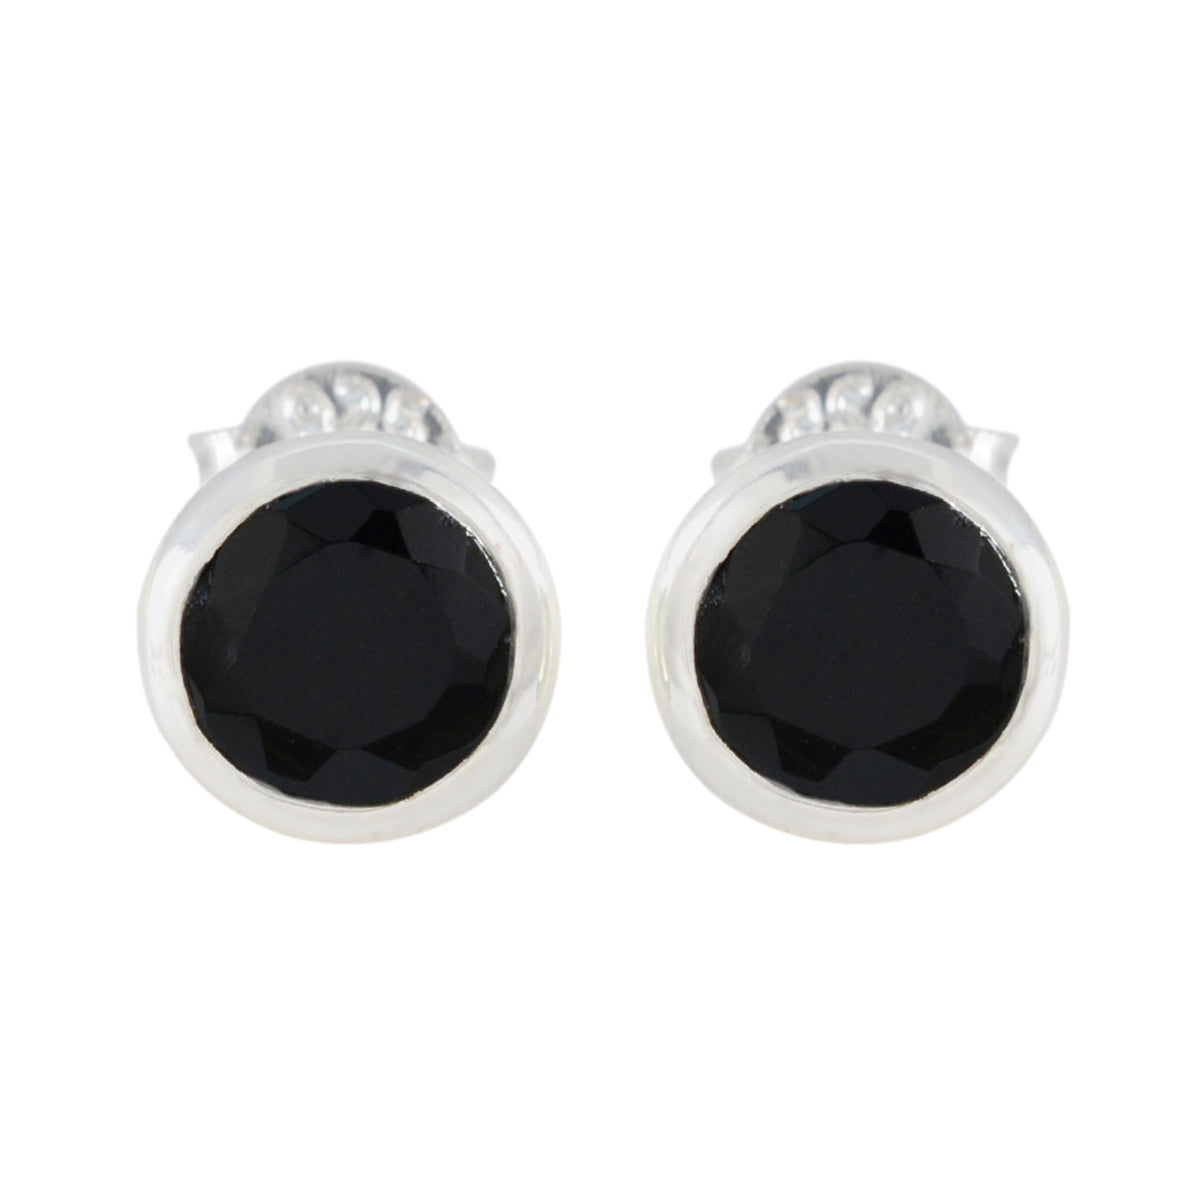 Riyo Beddable Sterling Silver Earring For Sister Black Onyx Earring Bezel Setting Black Earring Stud Earring